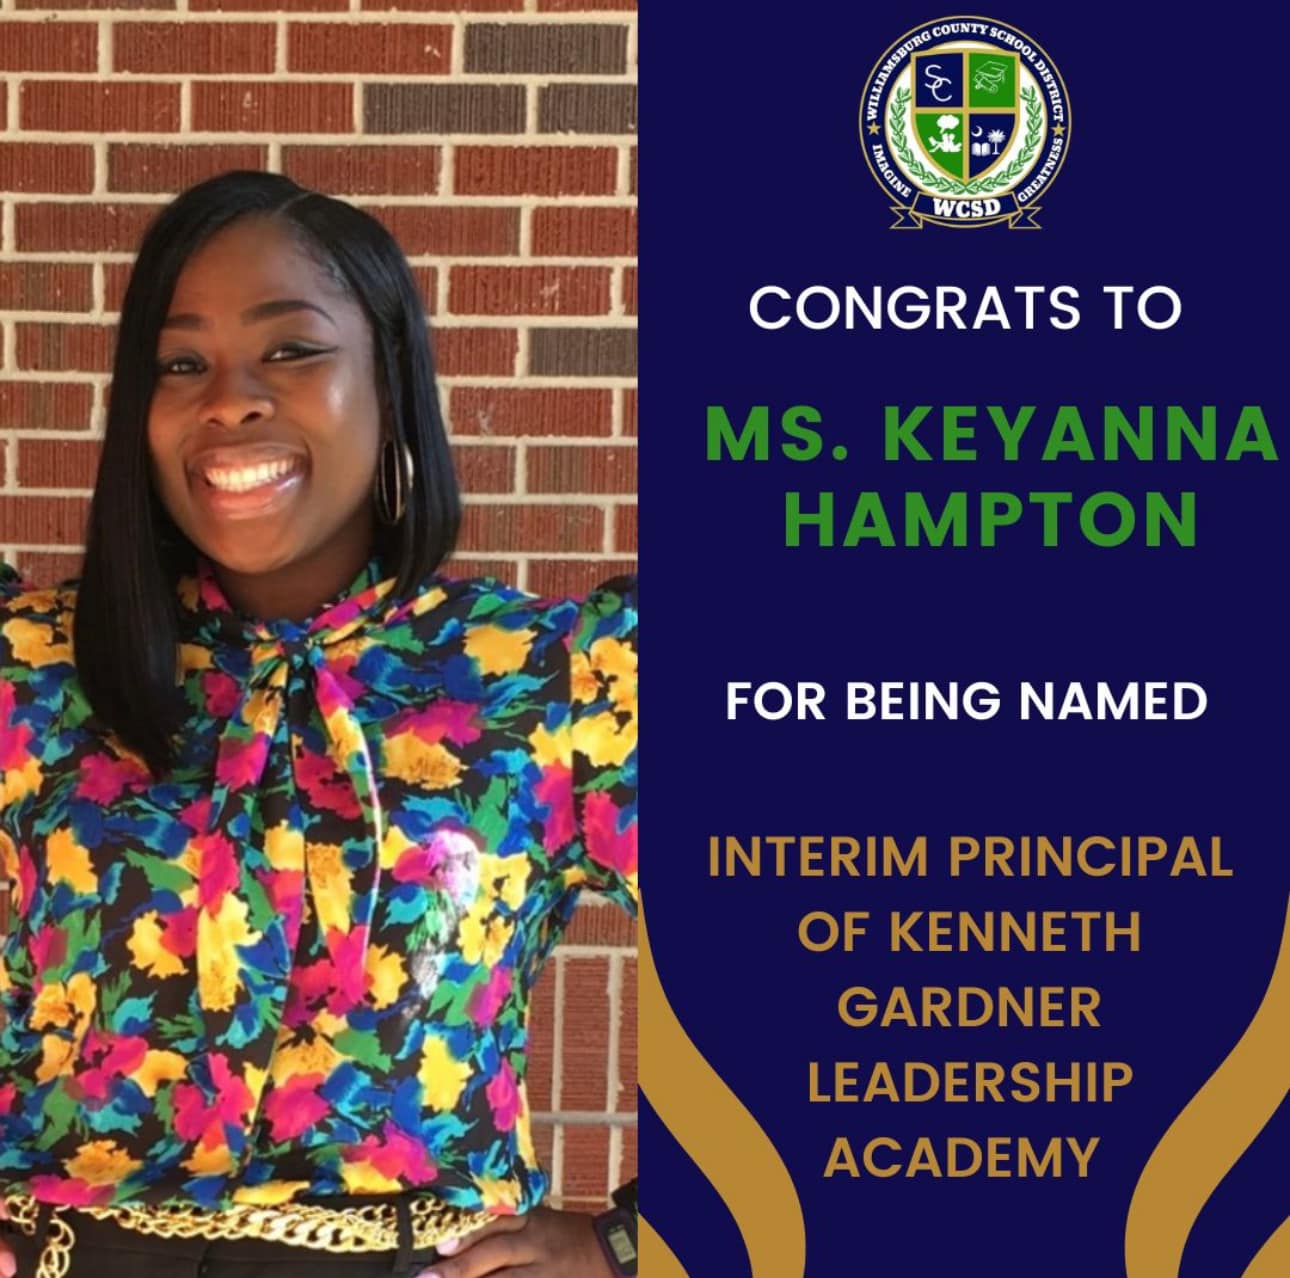 Williamsburg County School District Logo. Imagine Greatness. WCSD. Congrats to Ms. Keyanna Hampton for being named interim principal of Kenneth Gardner Leadership Academy